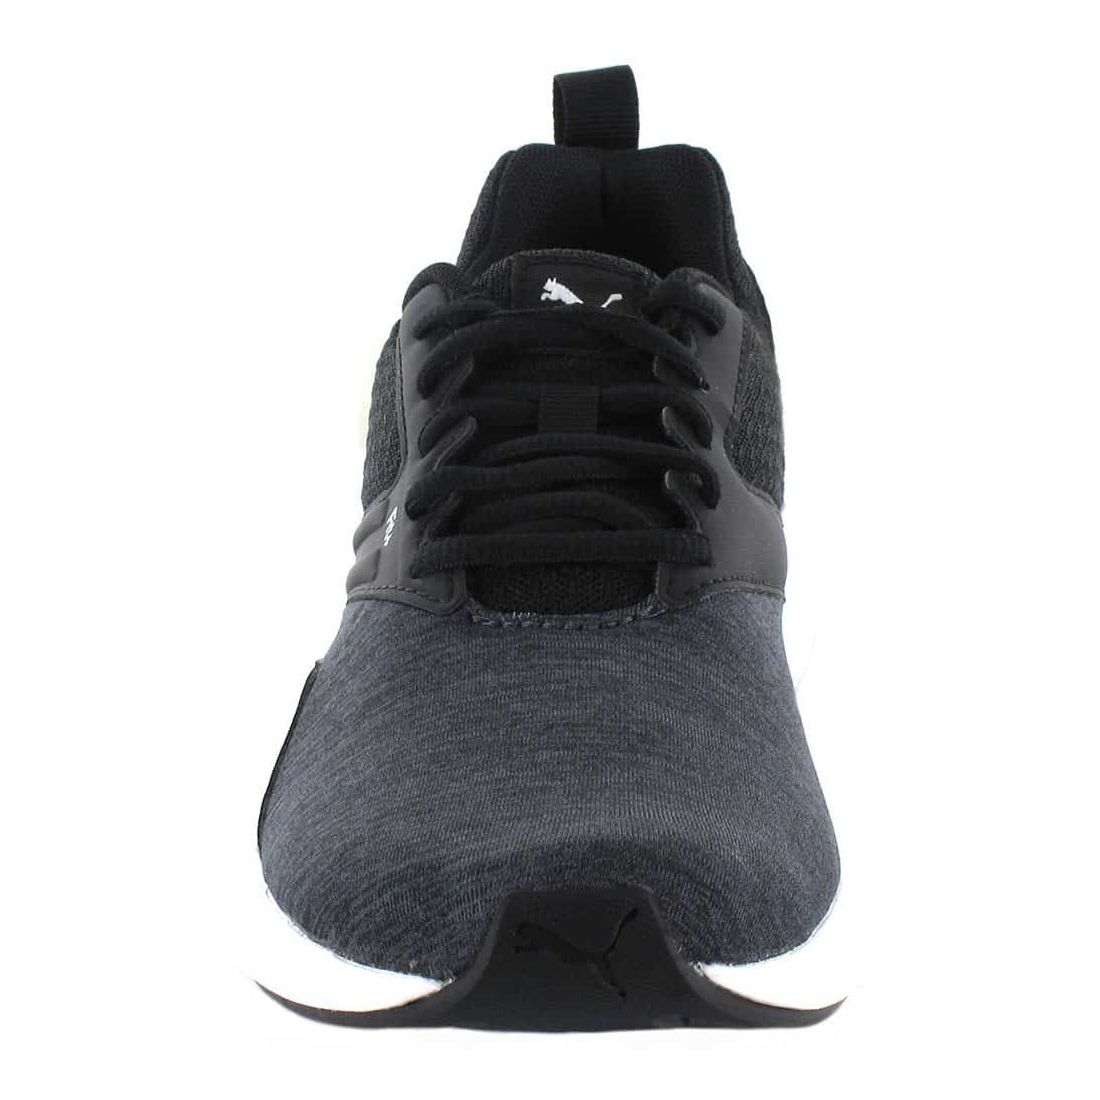 Puma NRGY Comet Black White - Running Man Sneakers